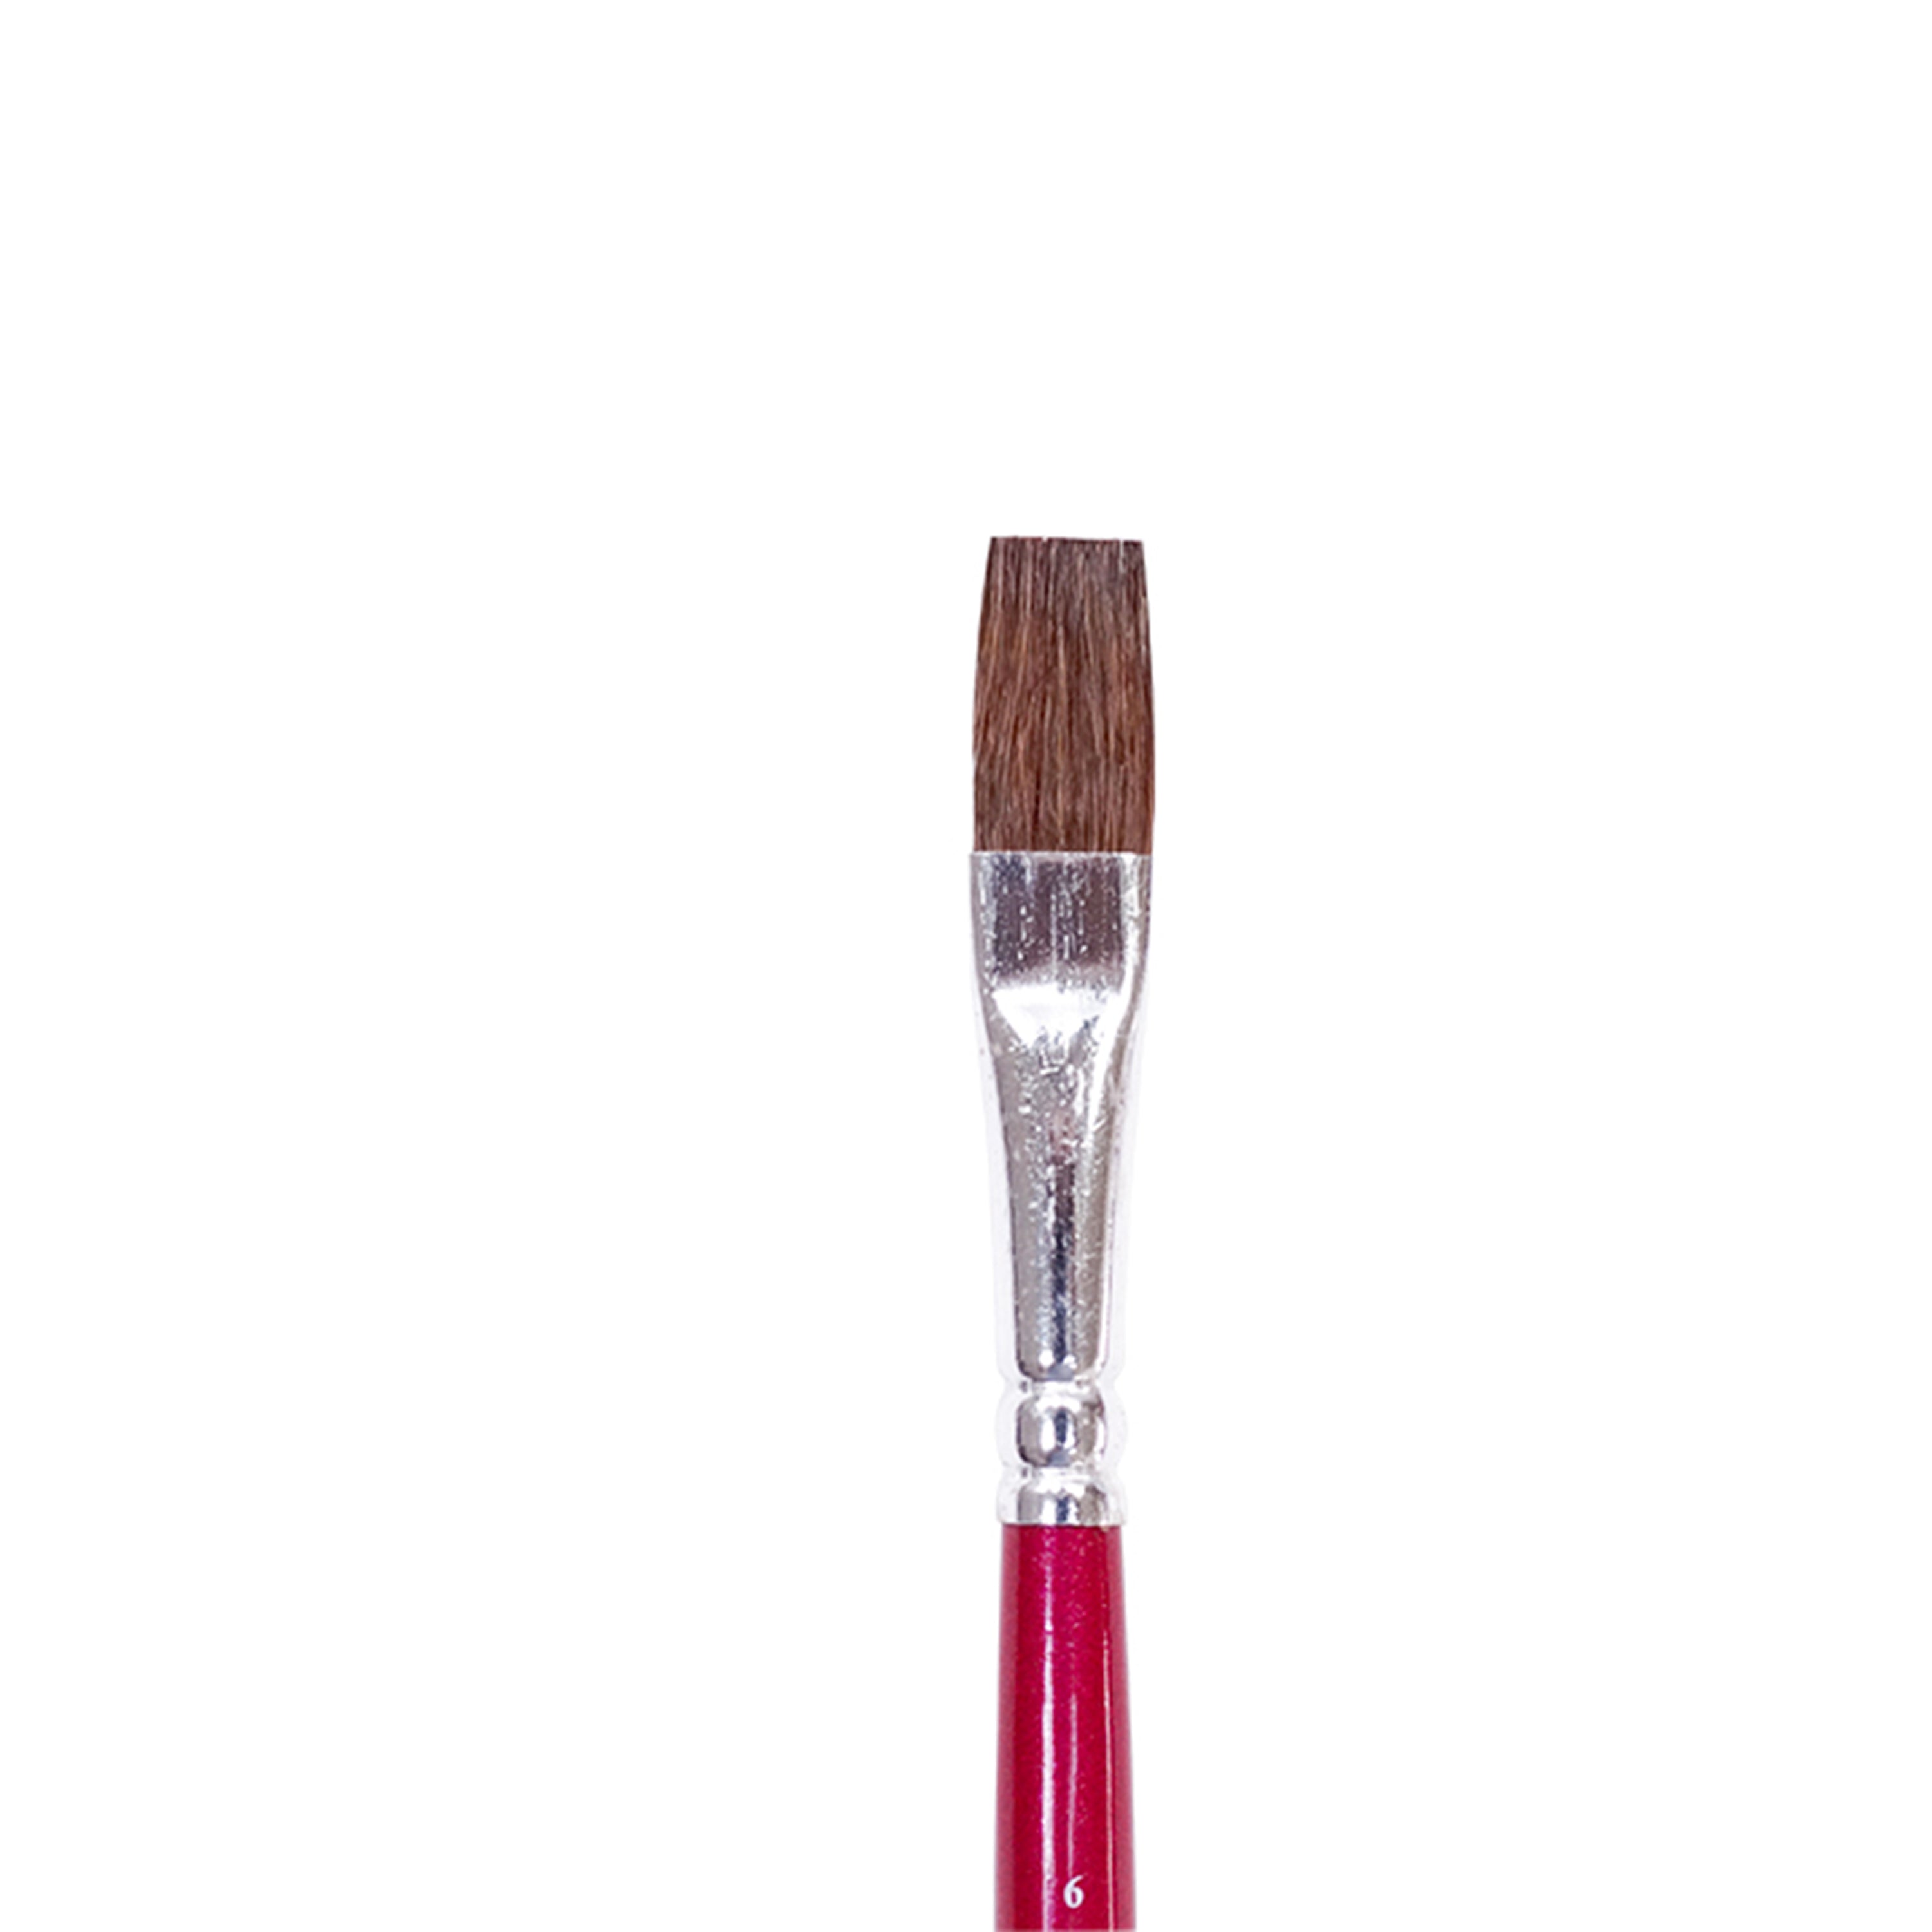 Faber Castell Paint Brush - Pony Hair Flat Size 6, 1pc